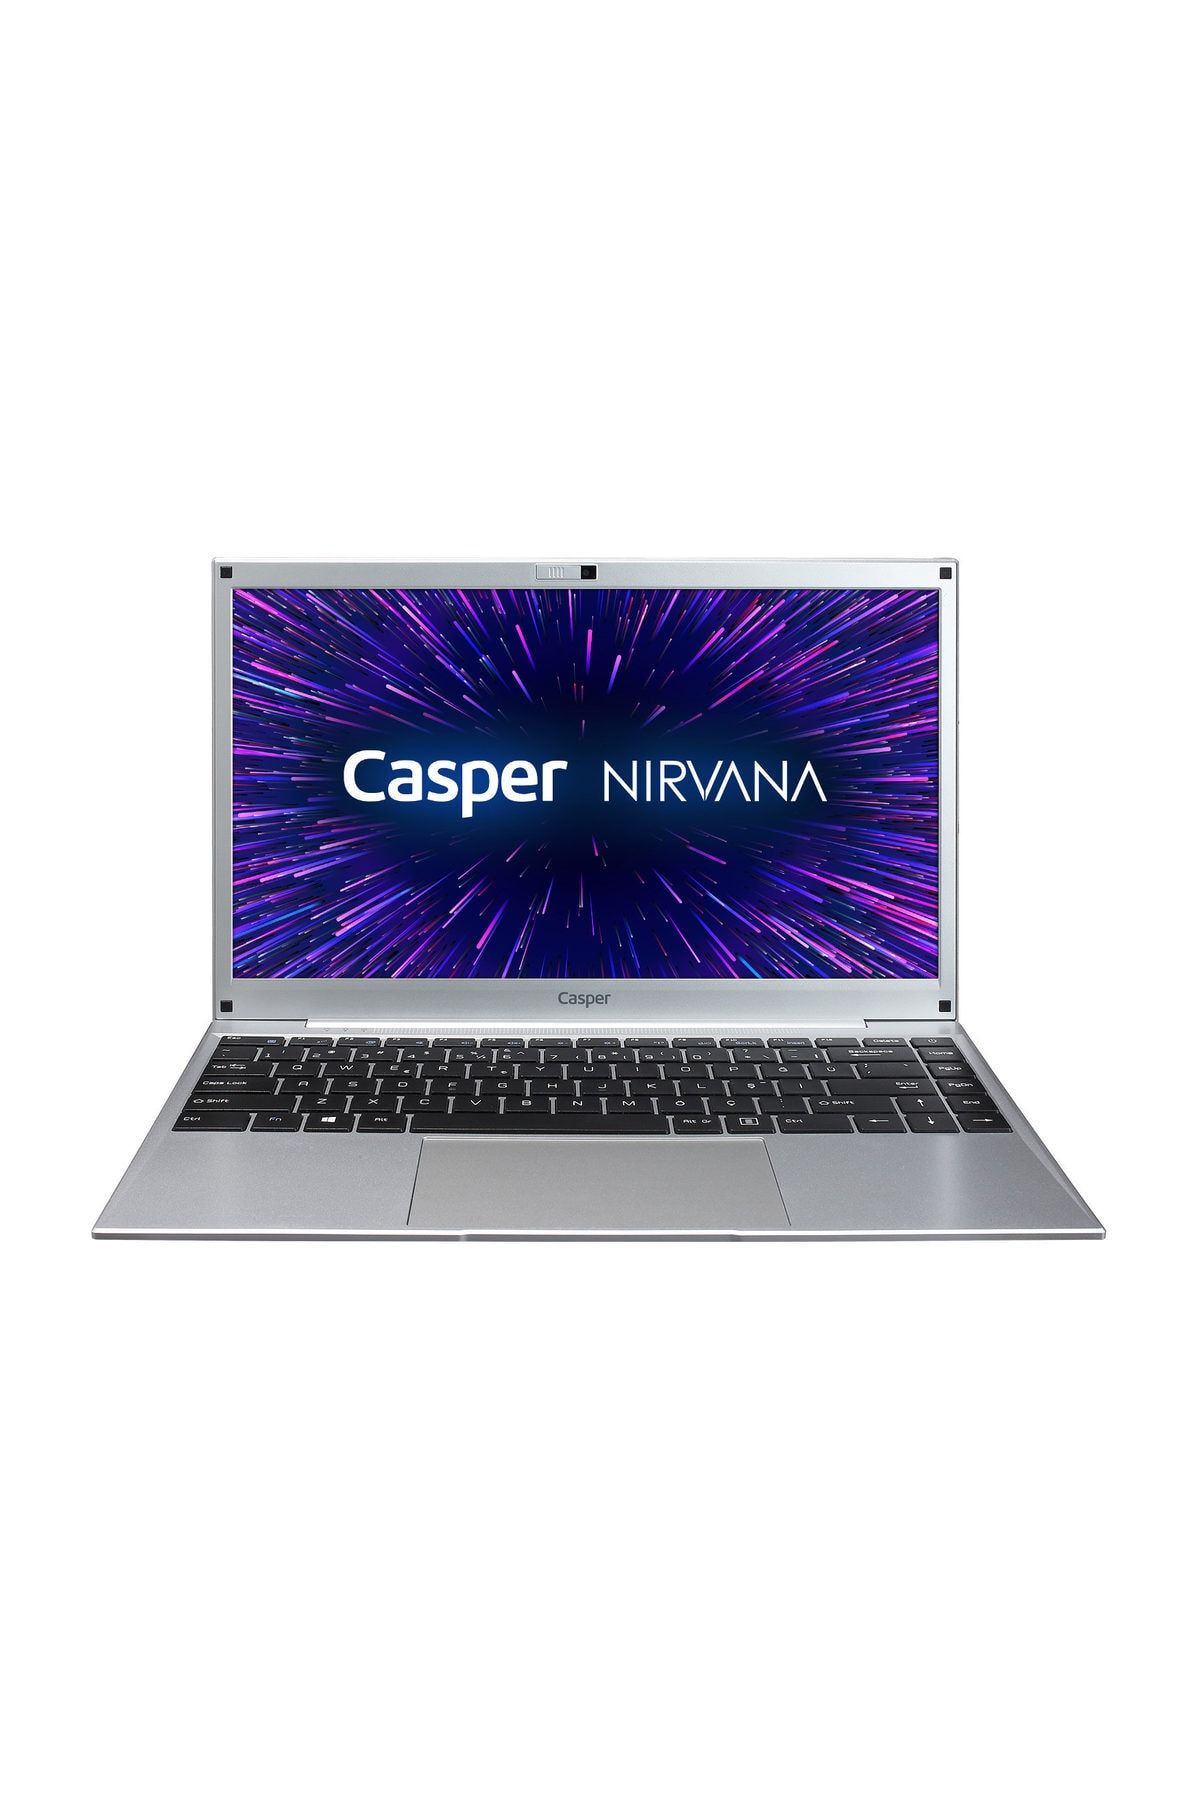 Casper Nirvana C350.5030-4C00X Intel Core Pentium G5030 4GB RAM 120GB SSD Freedos